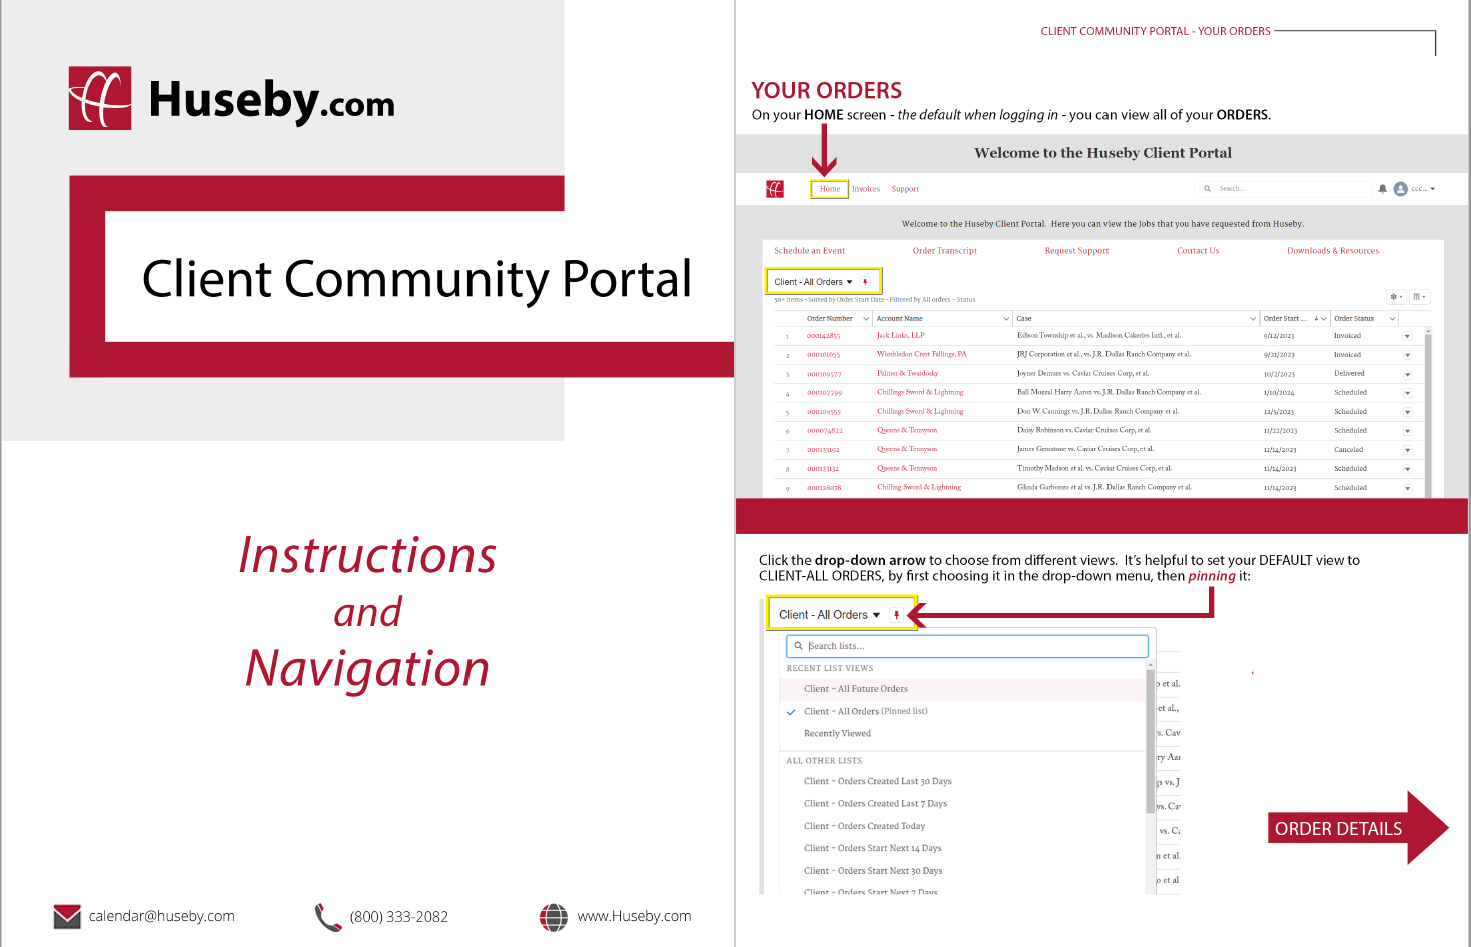 Client Community Portal - Full Instructions